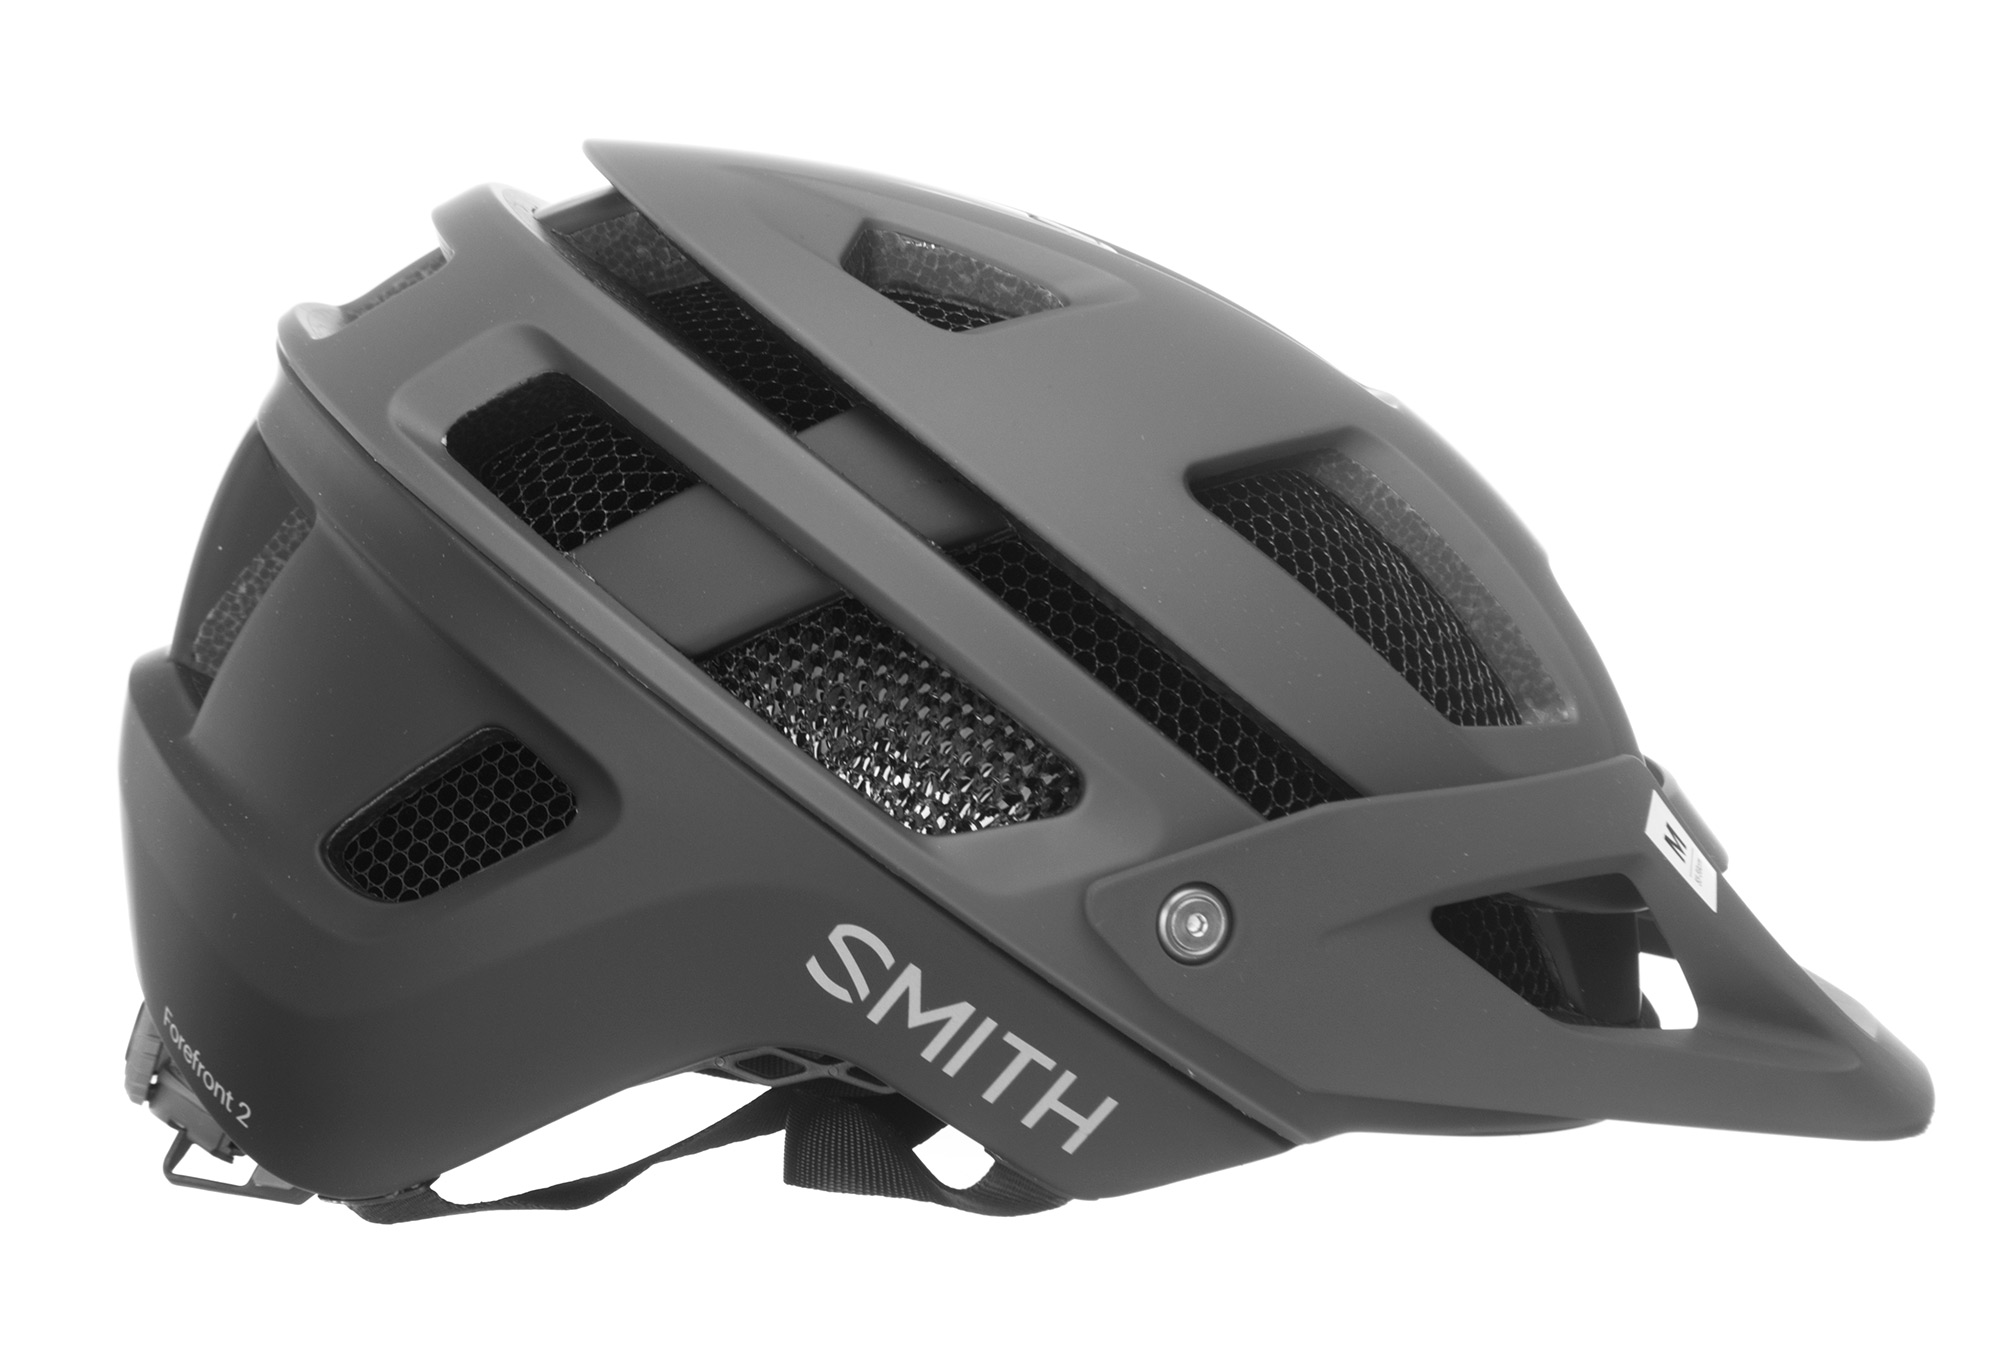 smith optics mtb helmet